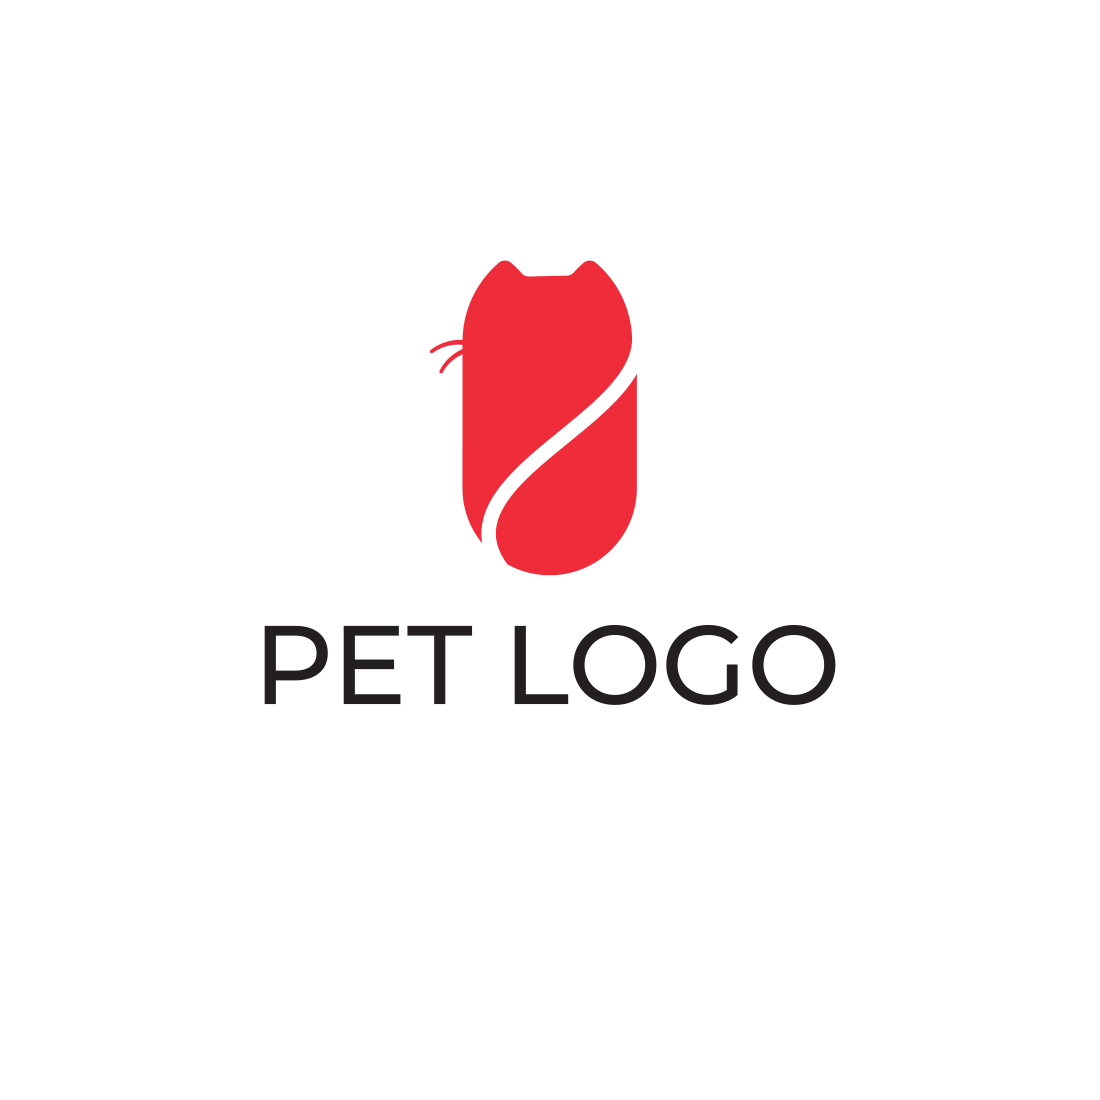 Pet logo cover image.